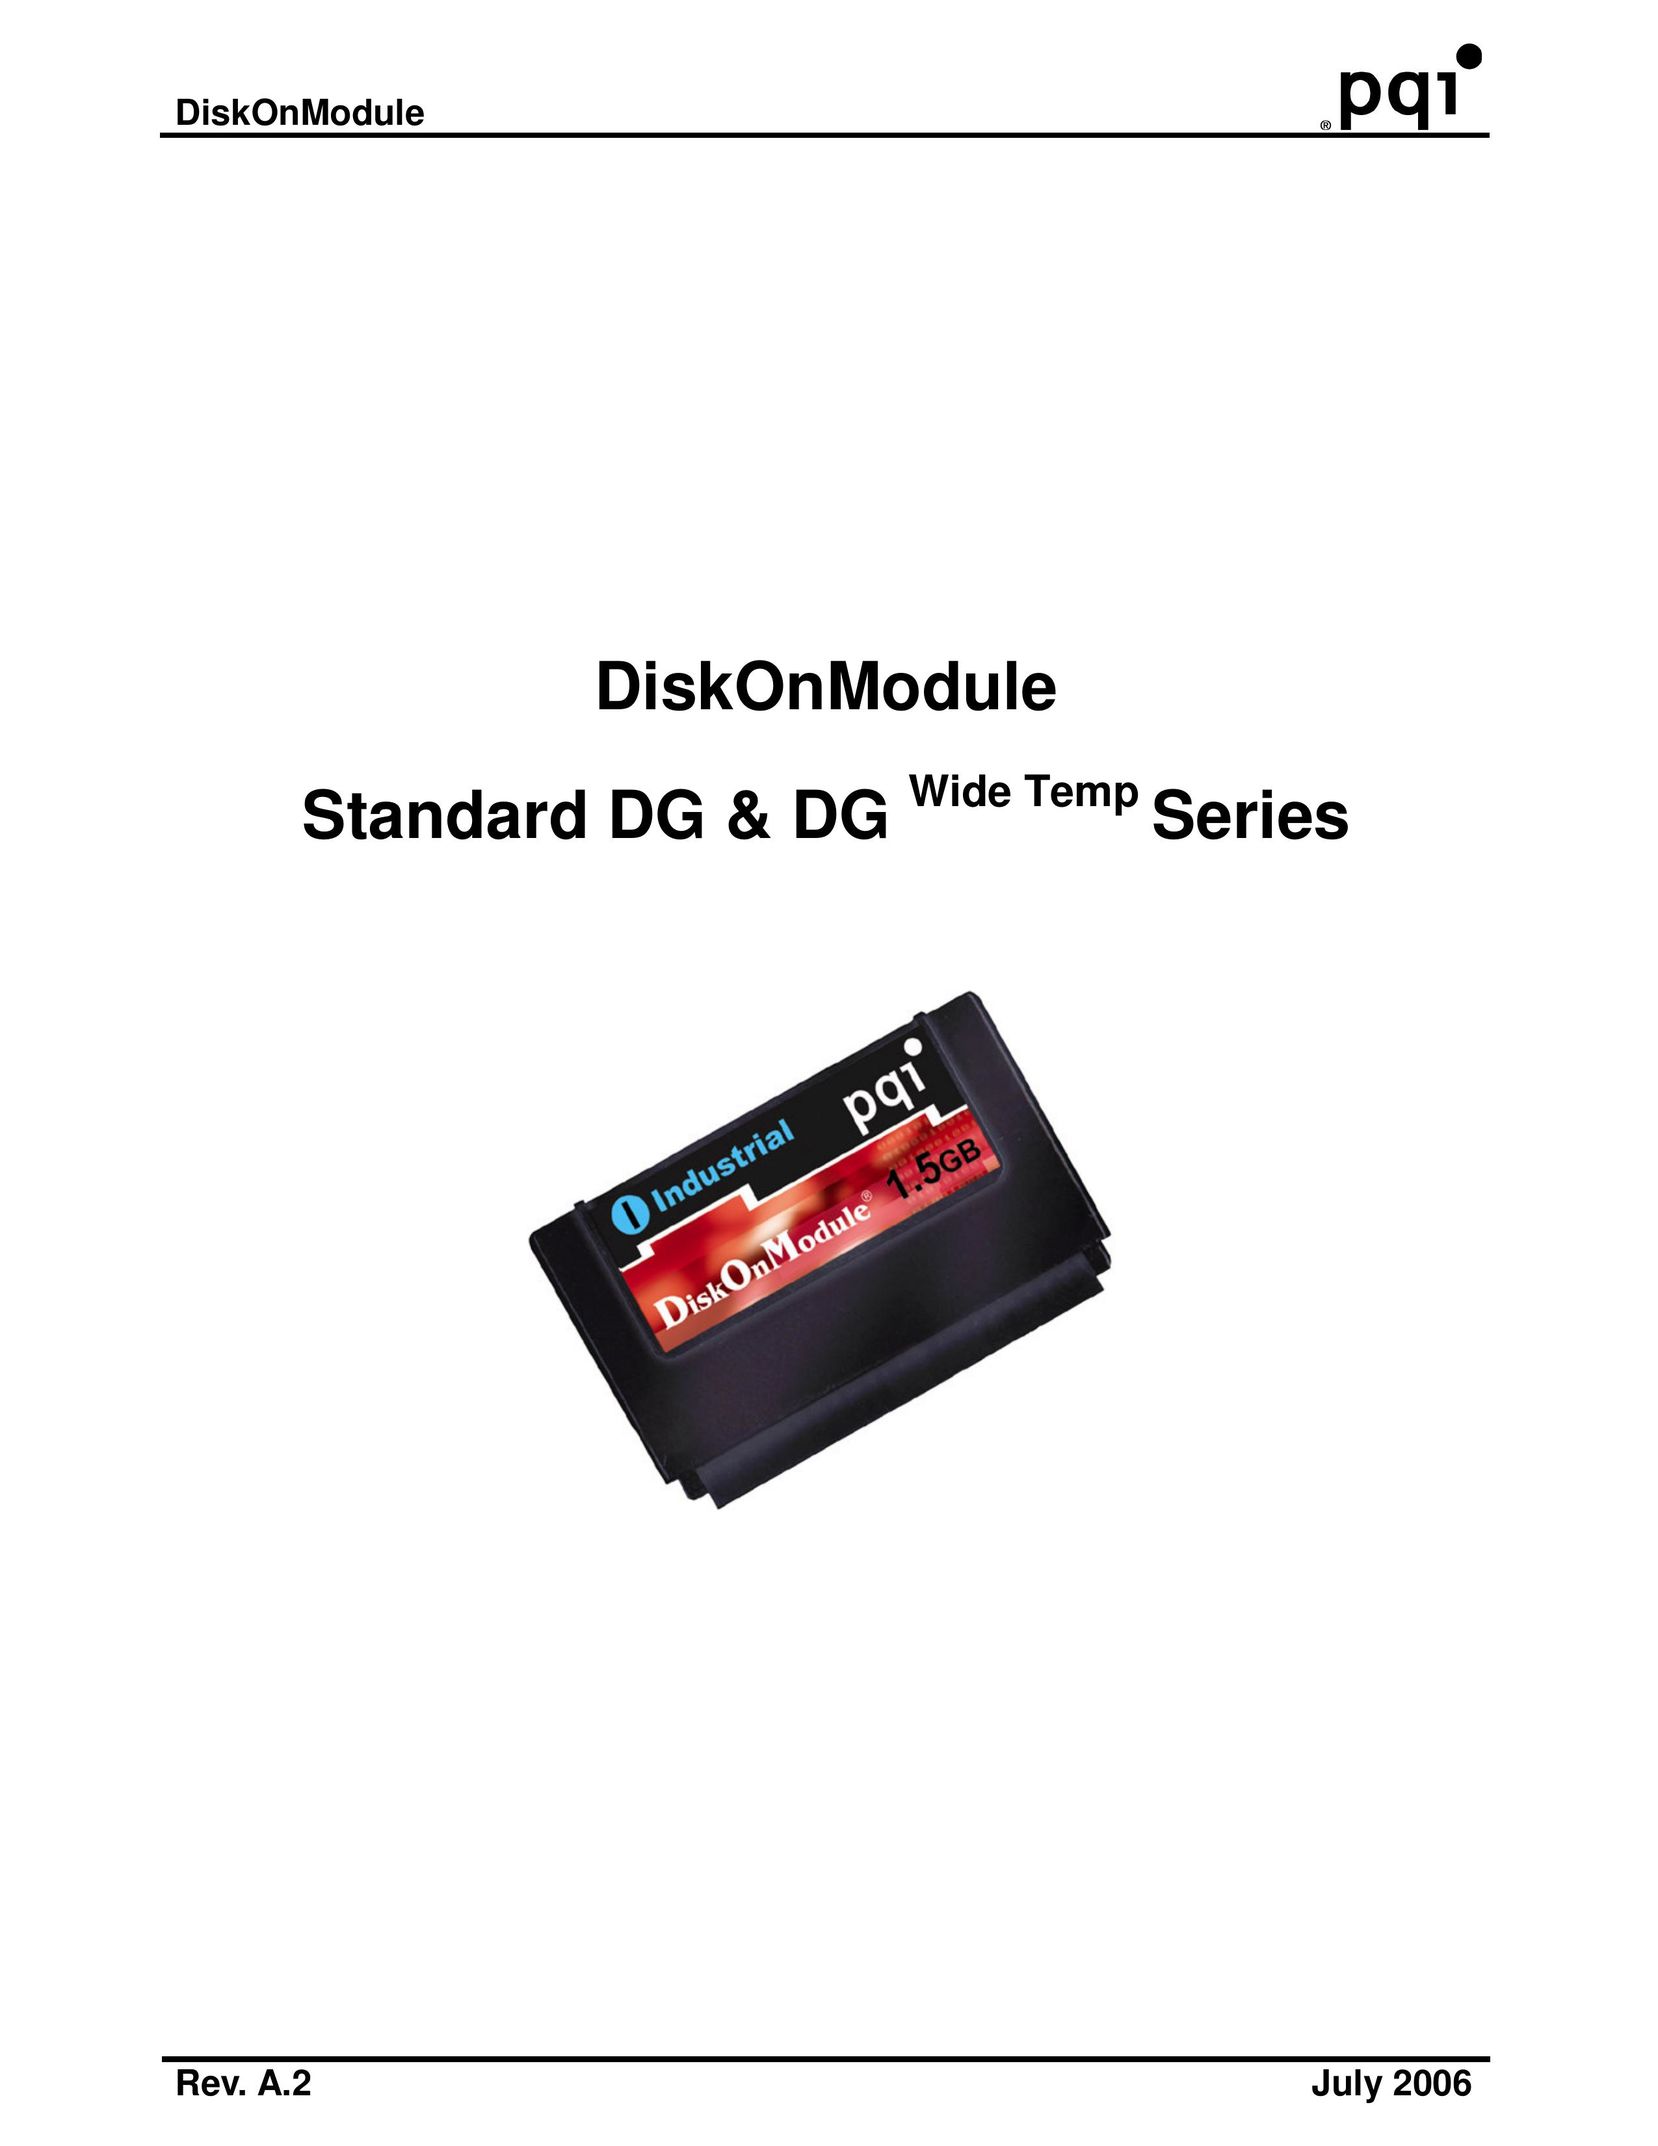 PQI DiskOnModule Network Card User Manual